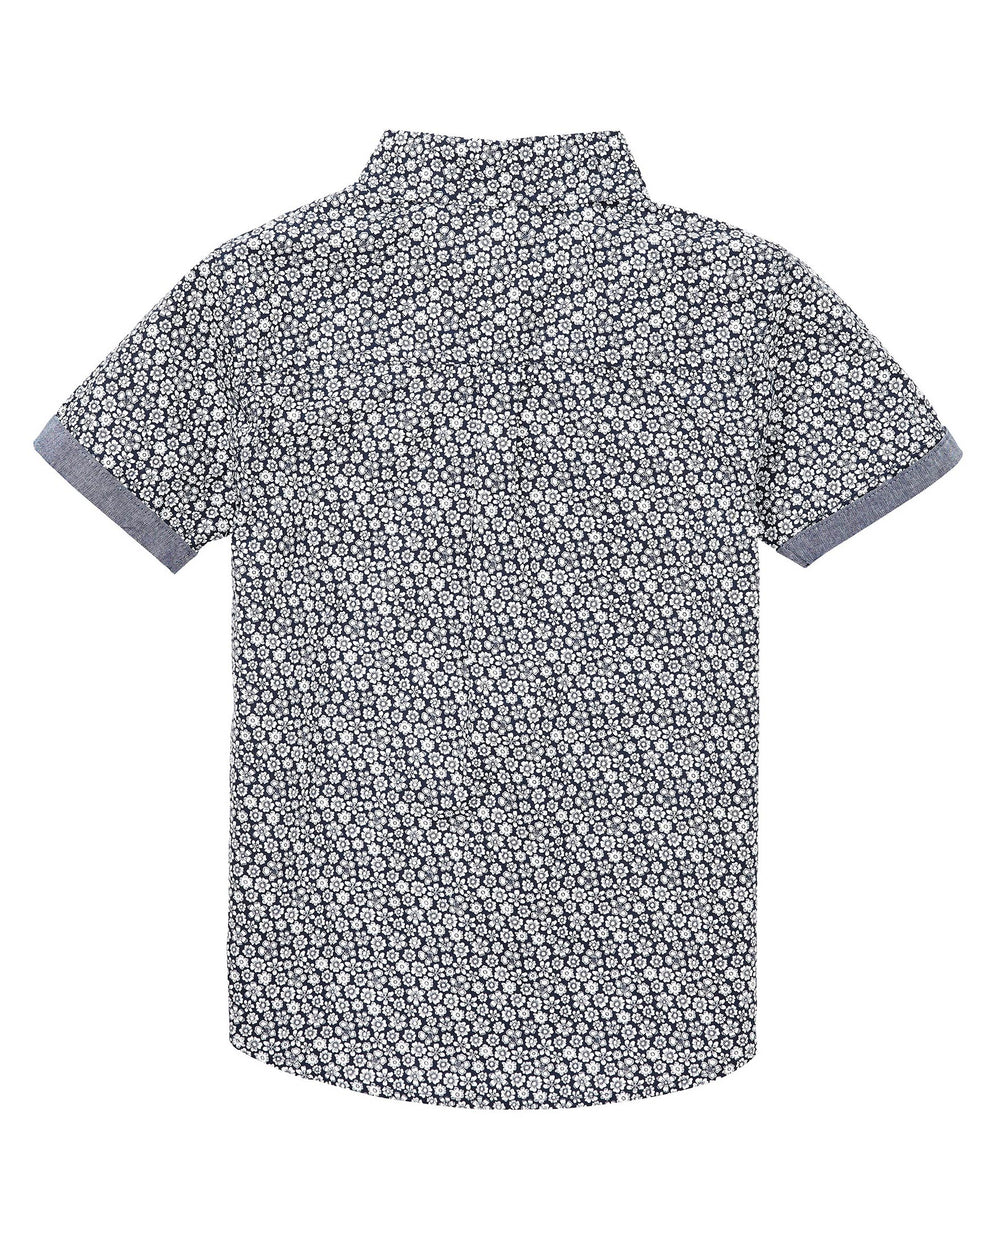 Boys' Navy/White Short-Sleeve Button-Down Shirt (Sizes 8-18)